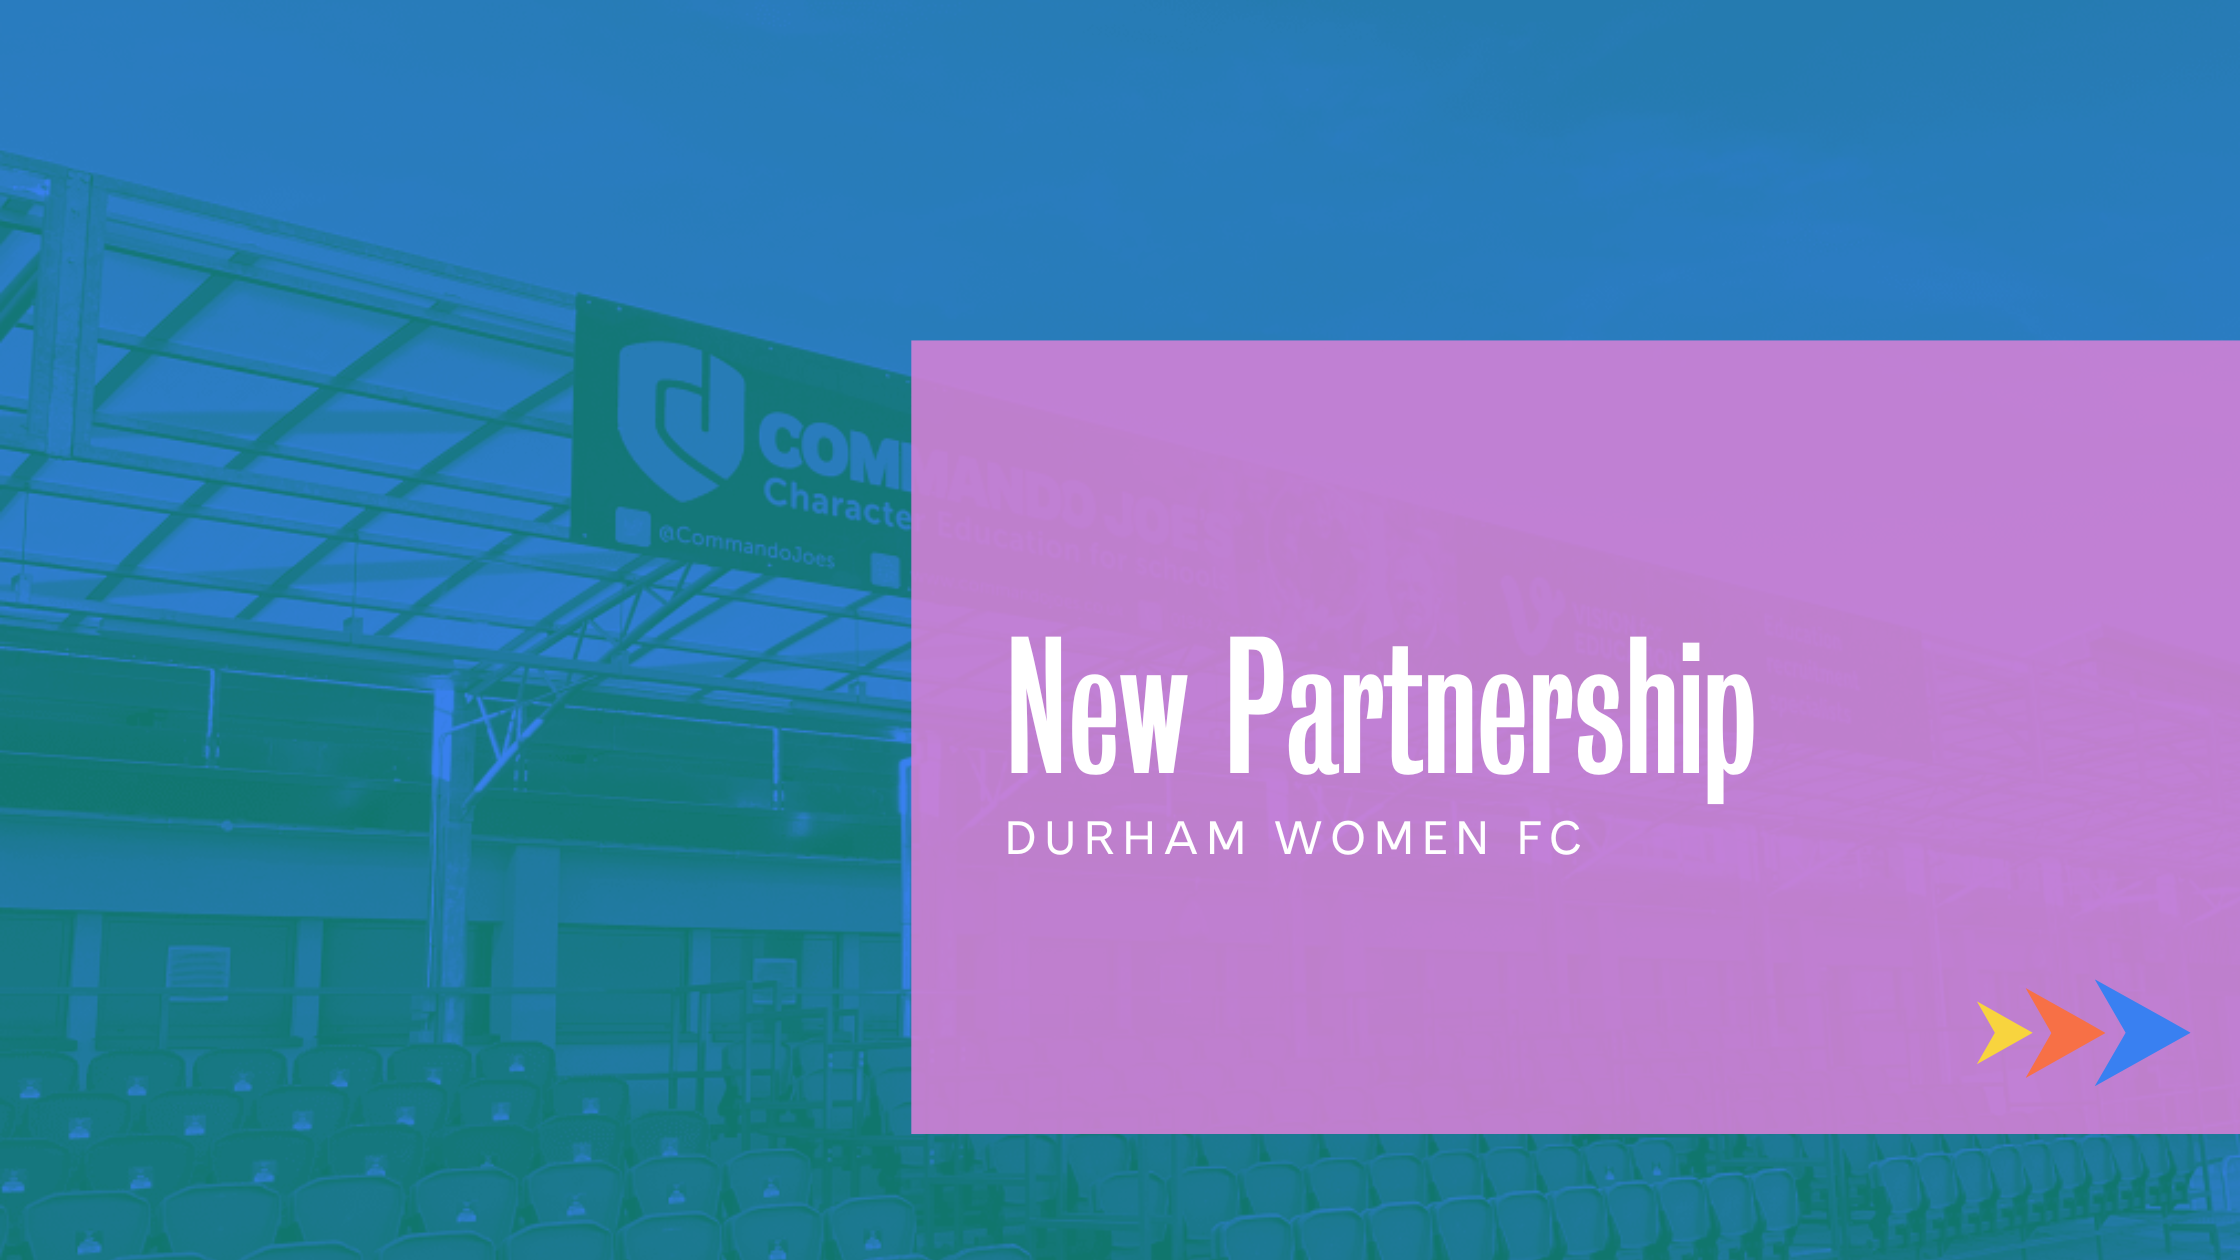 New Partnership Durham Women FC